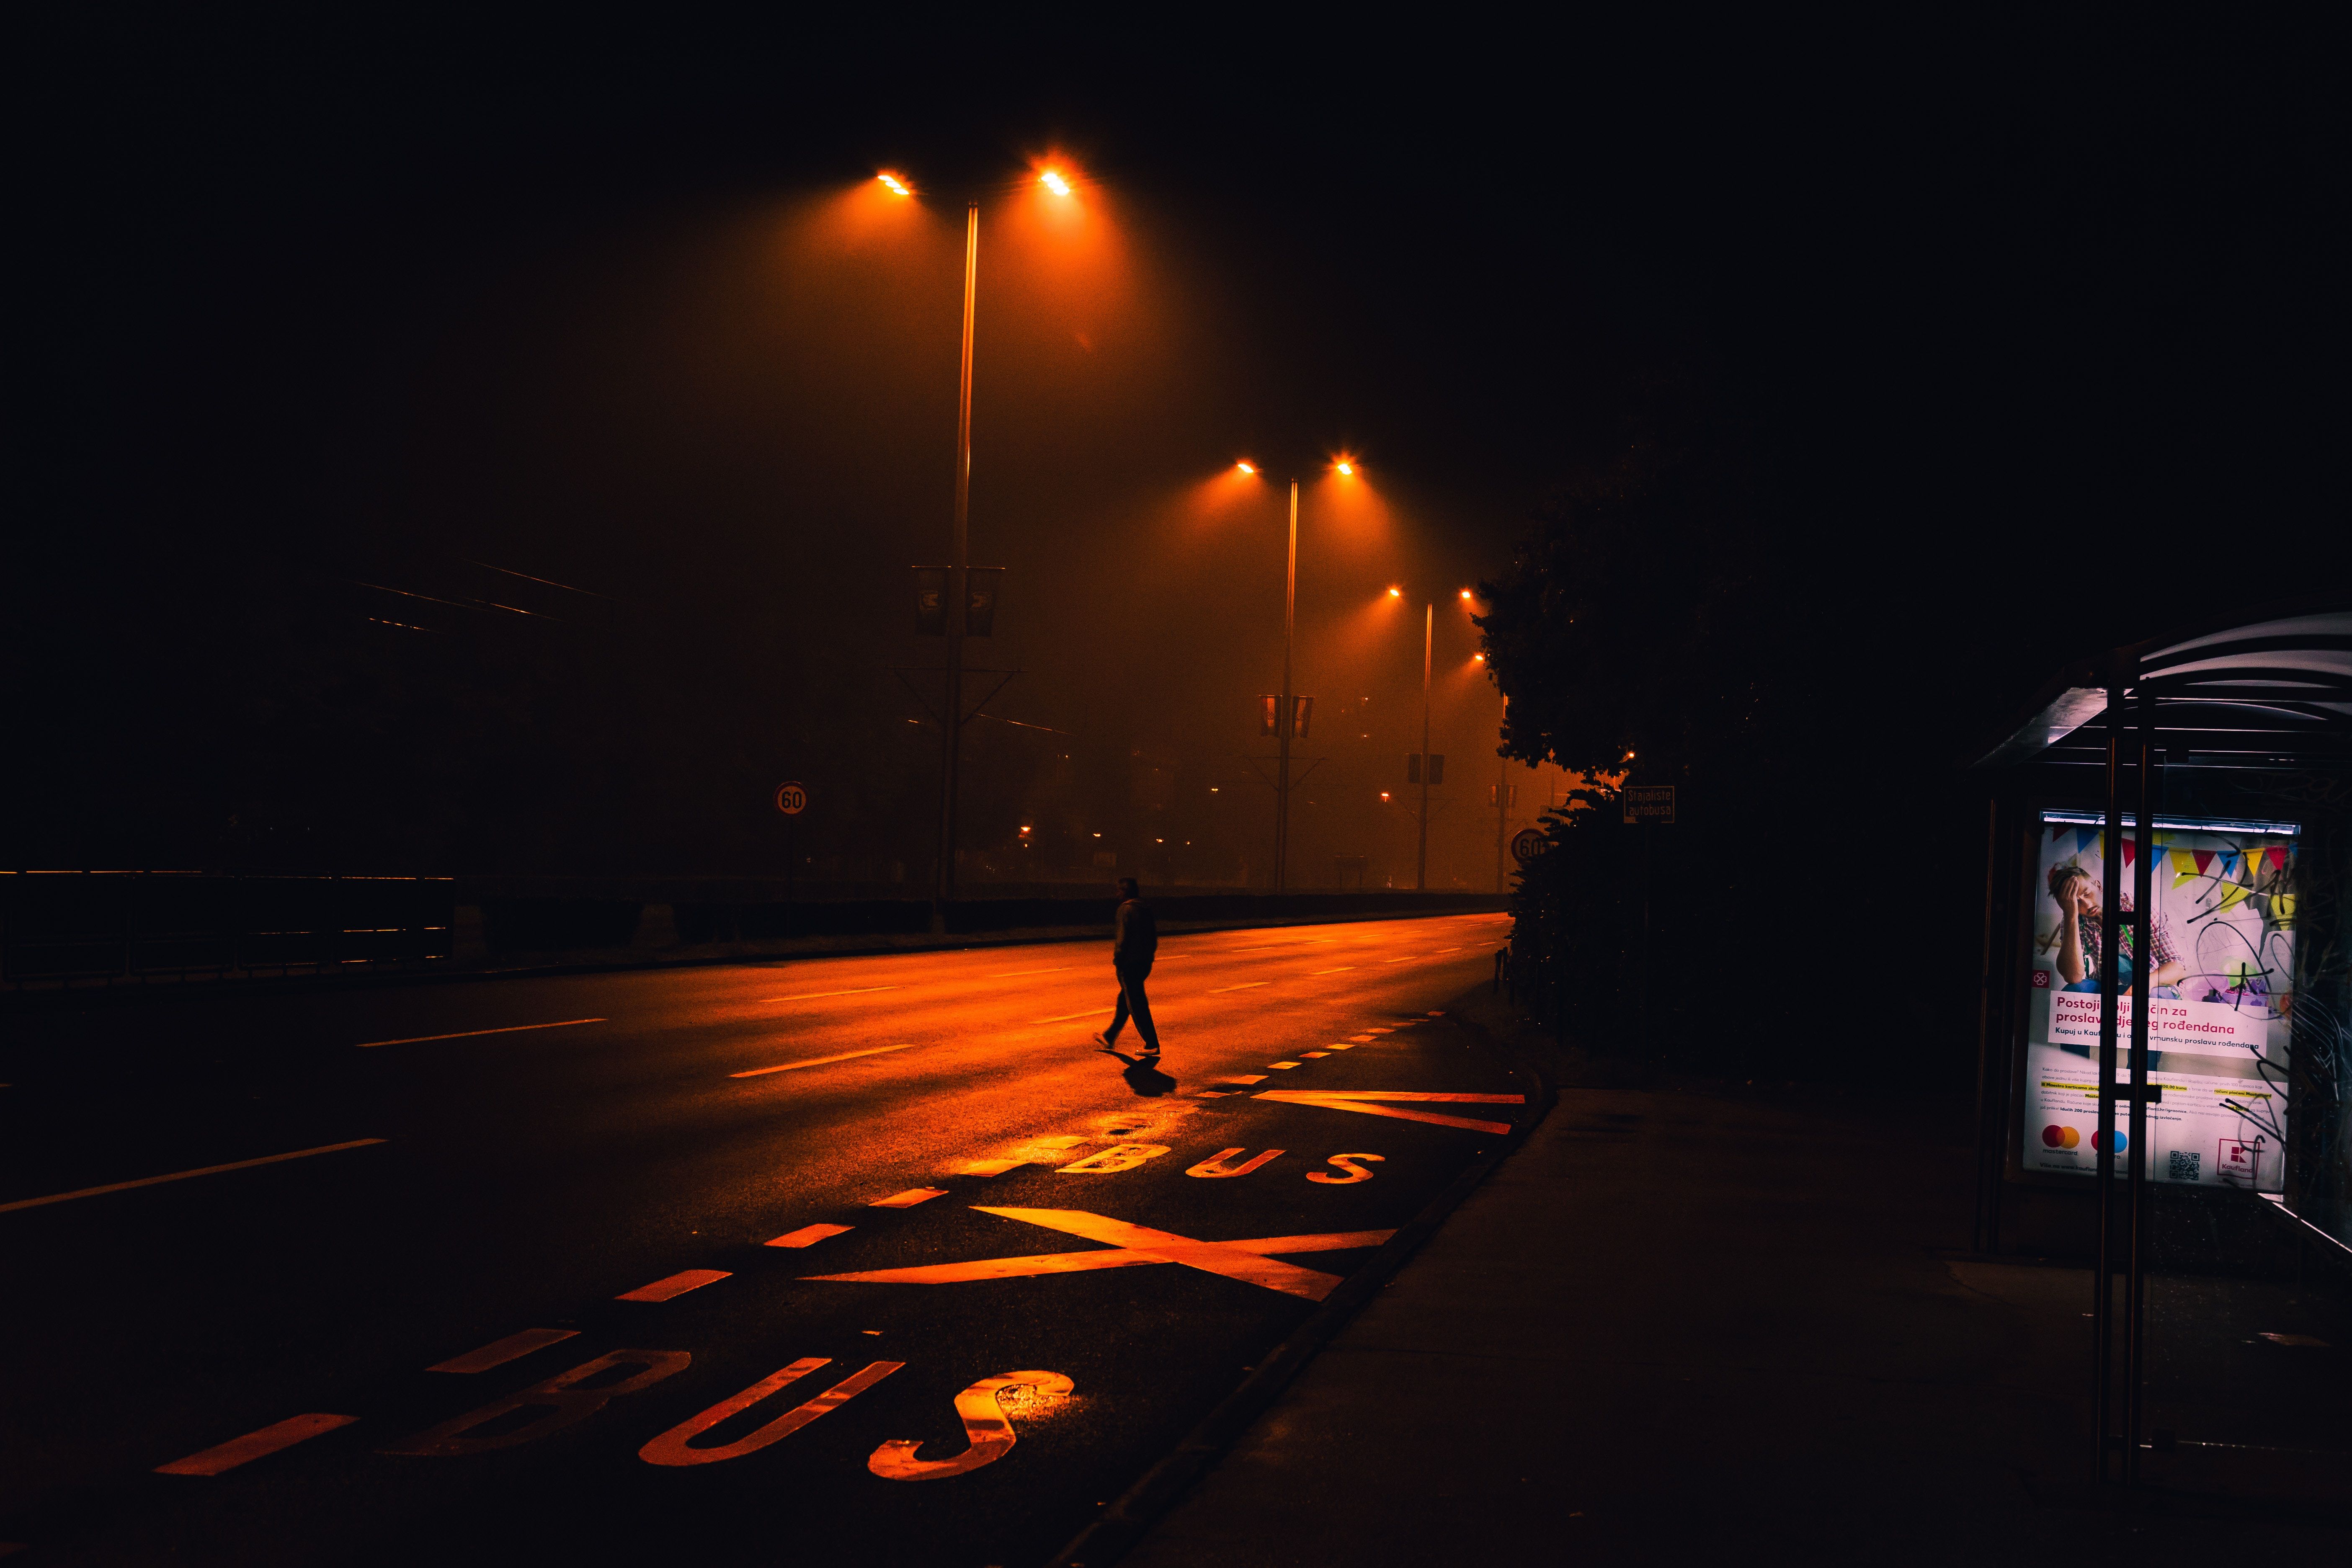 Night Street Light Photography Settings ~ Least Side Bodbocwasuon